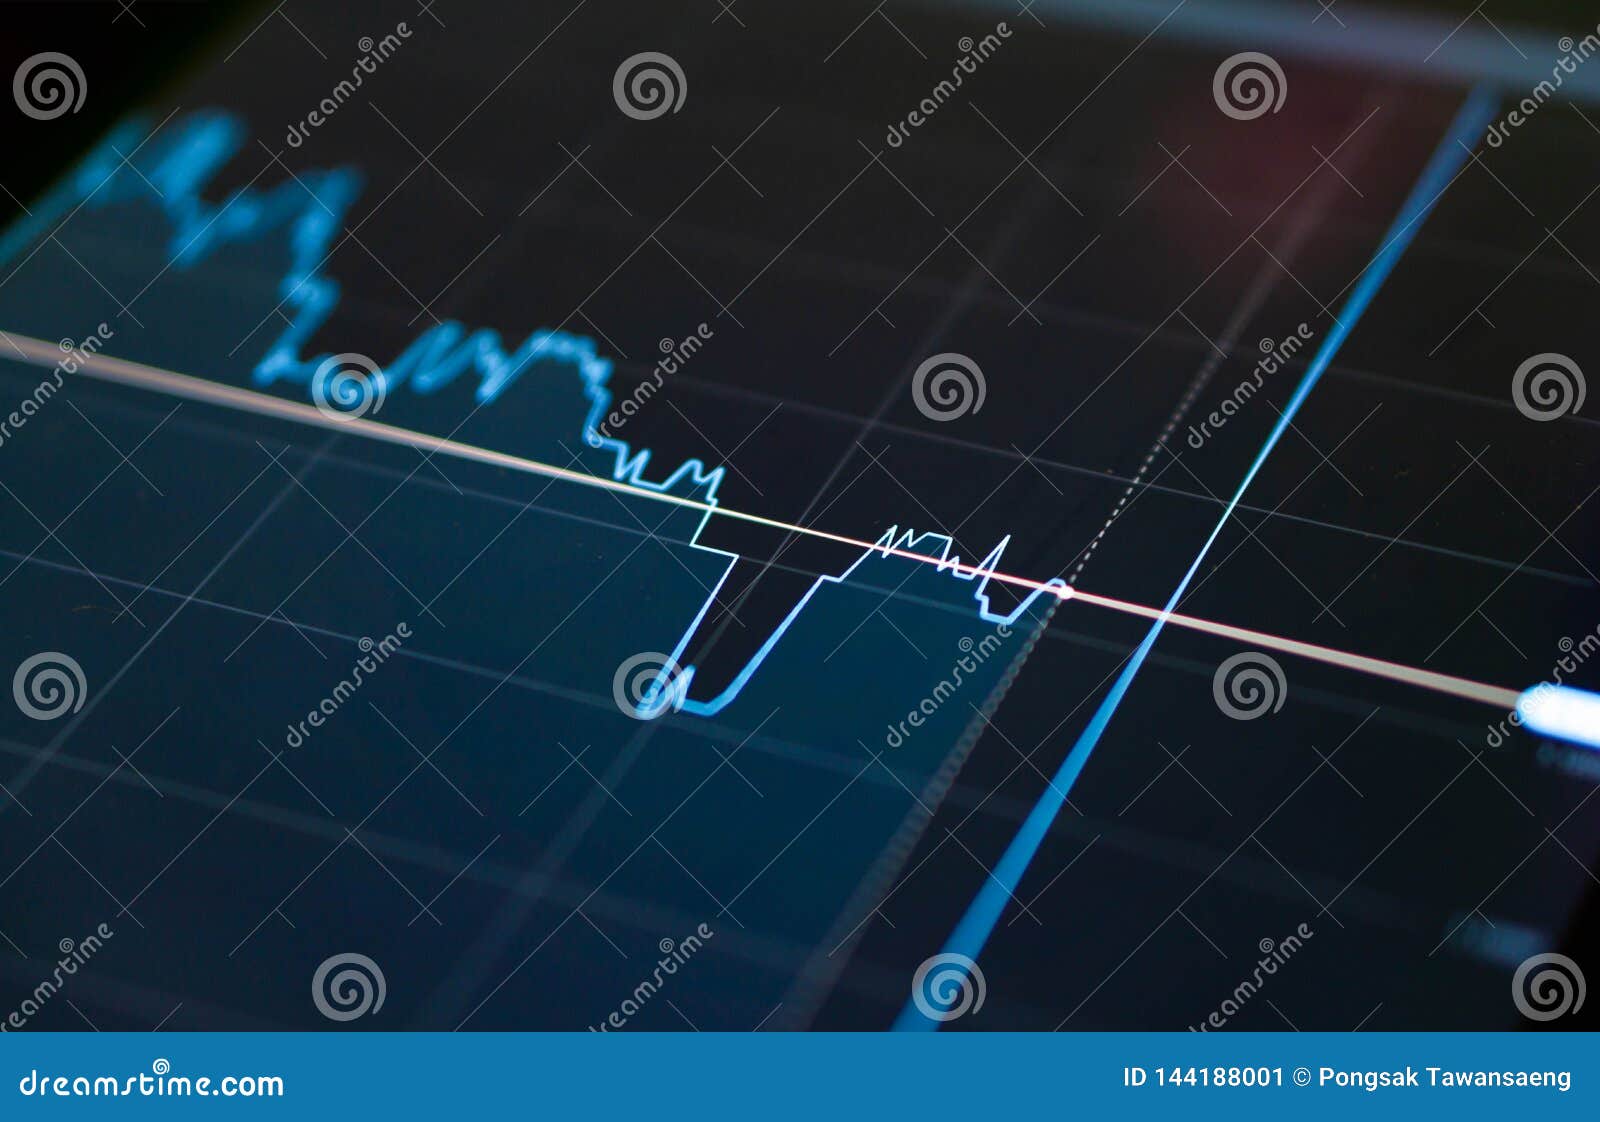 Binary options trading graphs